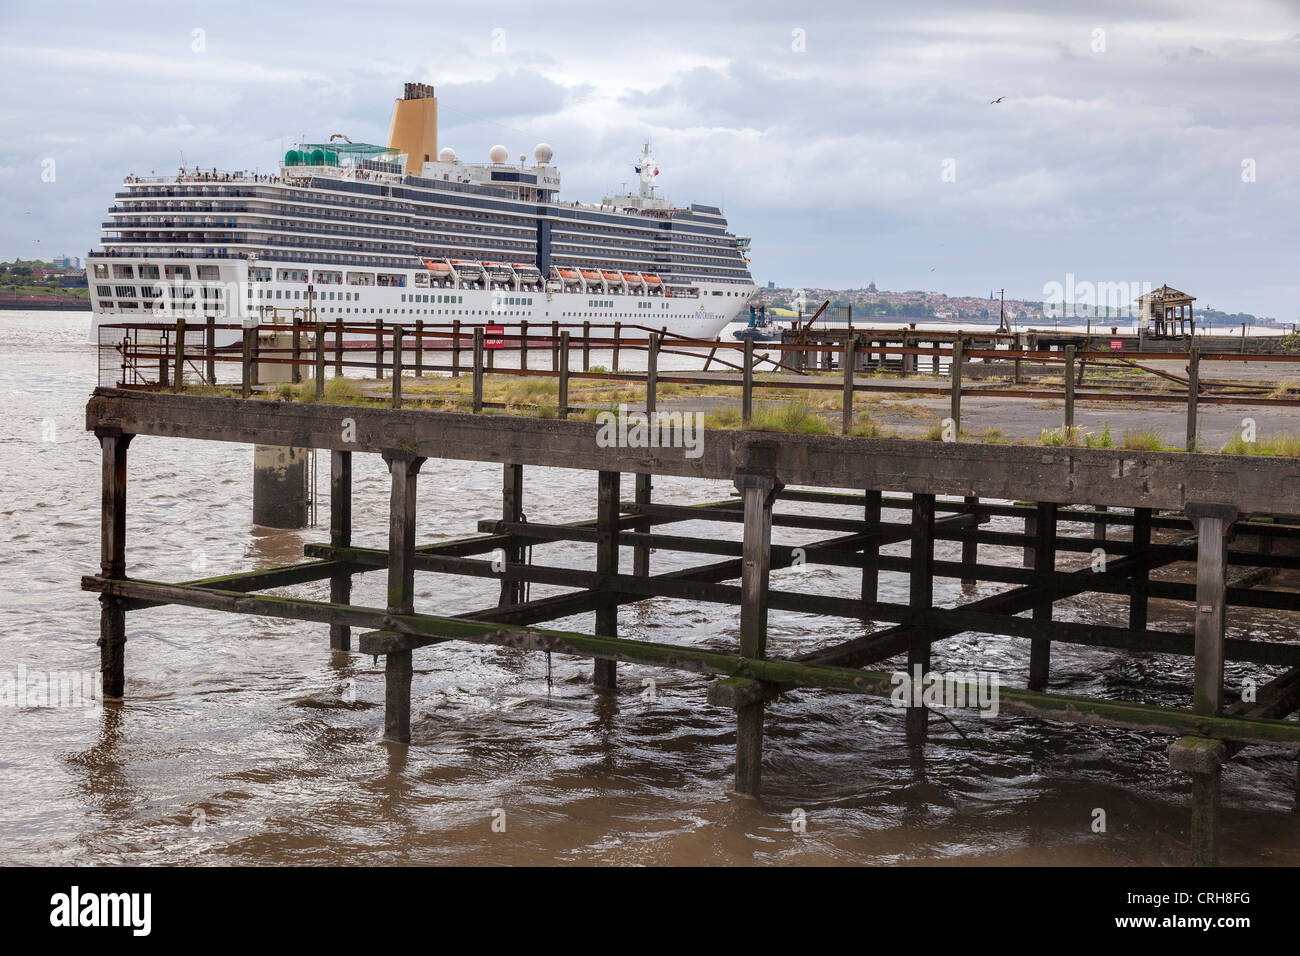 P & O Cruise liner Arcadia at Liverpool pierhead cruise terminal. Stock Photo